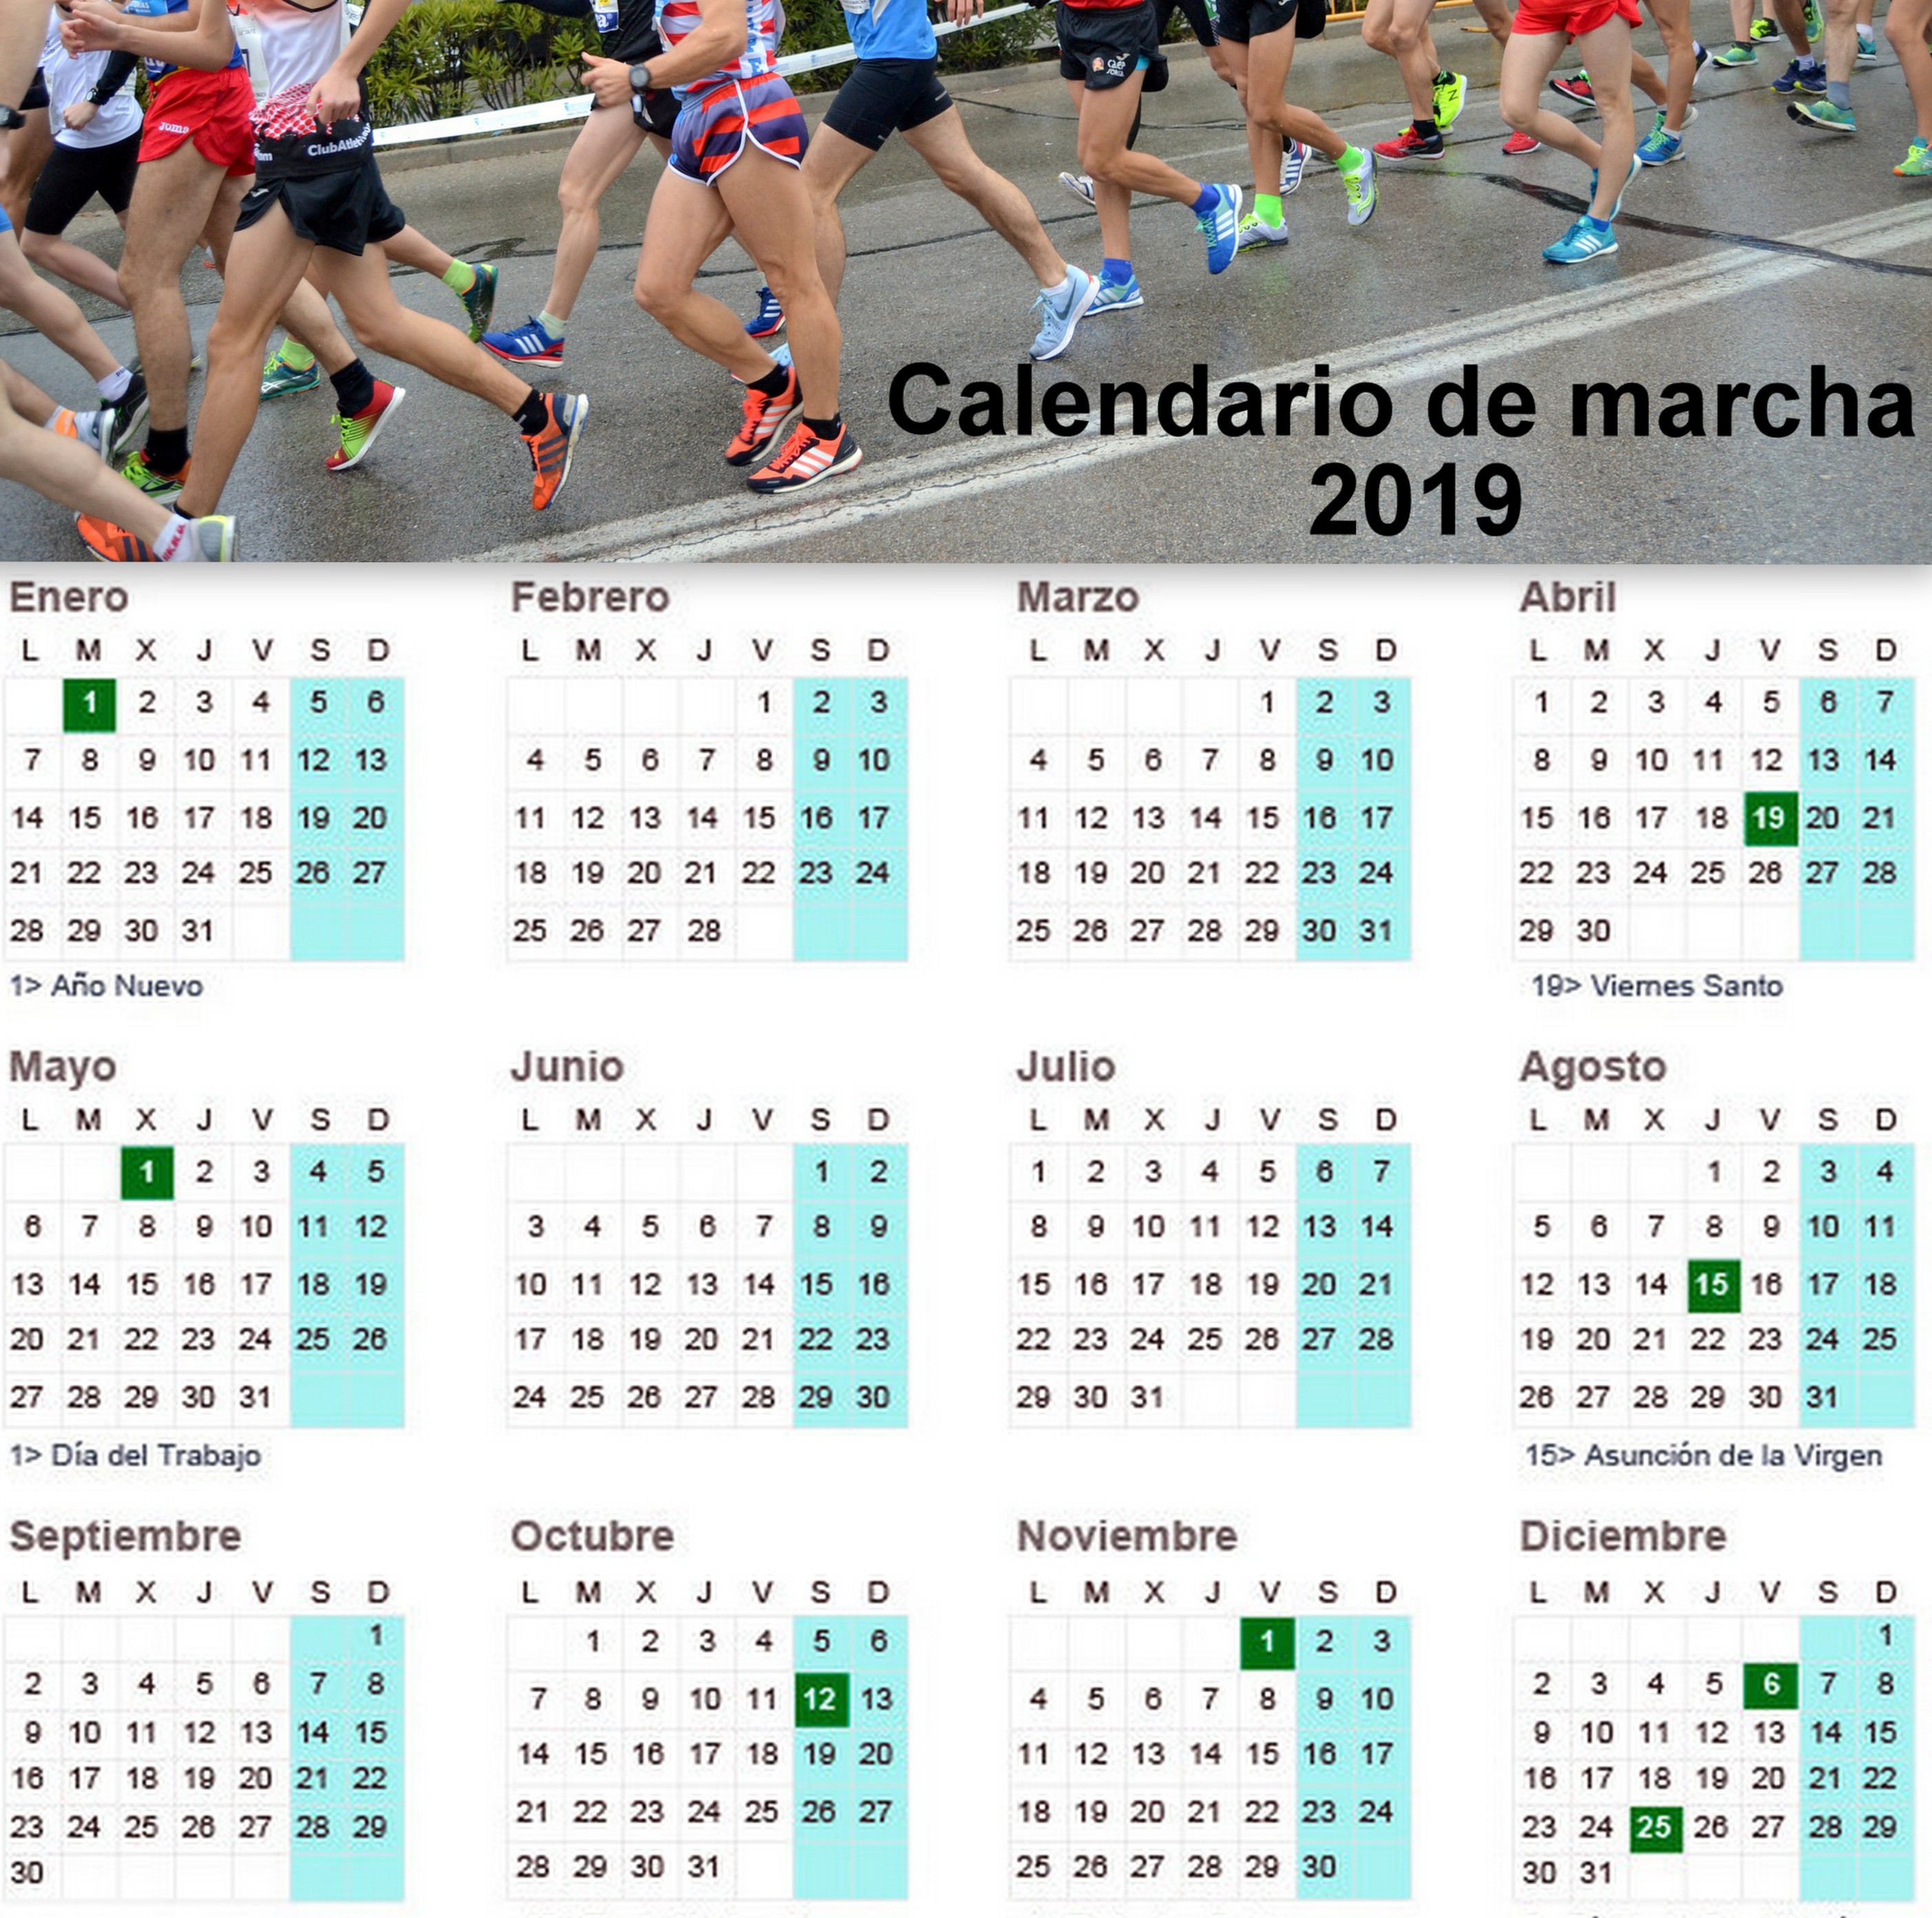 Calendario de marcha atlética 2018/2019